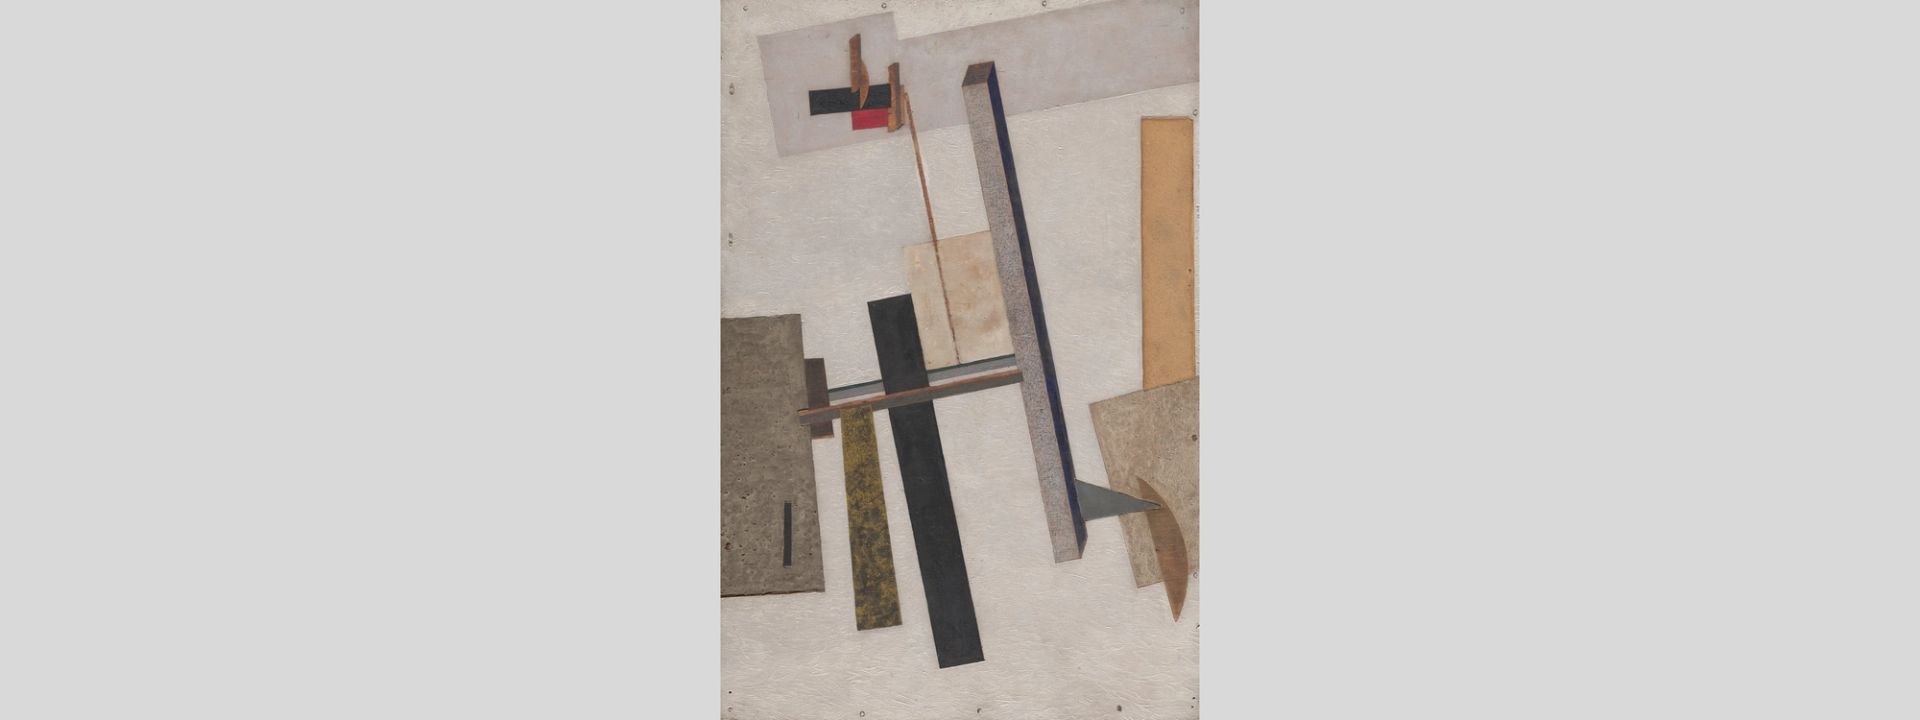 Proun 2 (Construction), 1920, by El Lissitzky